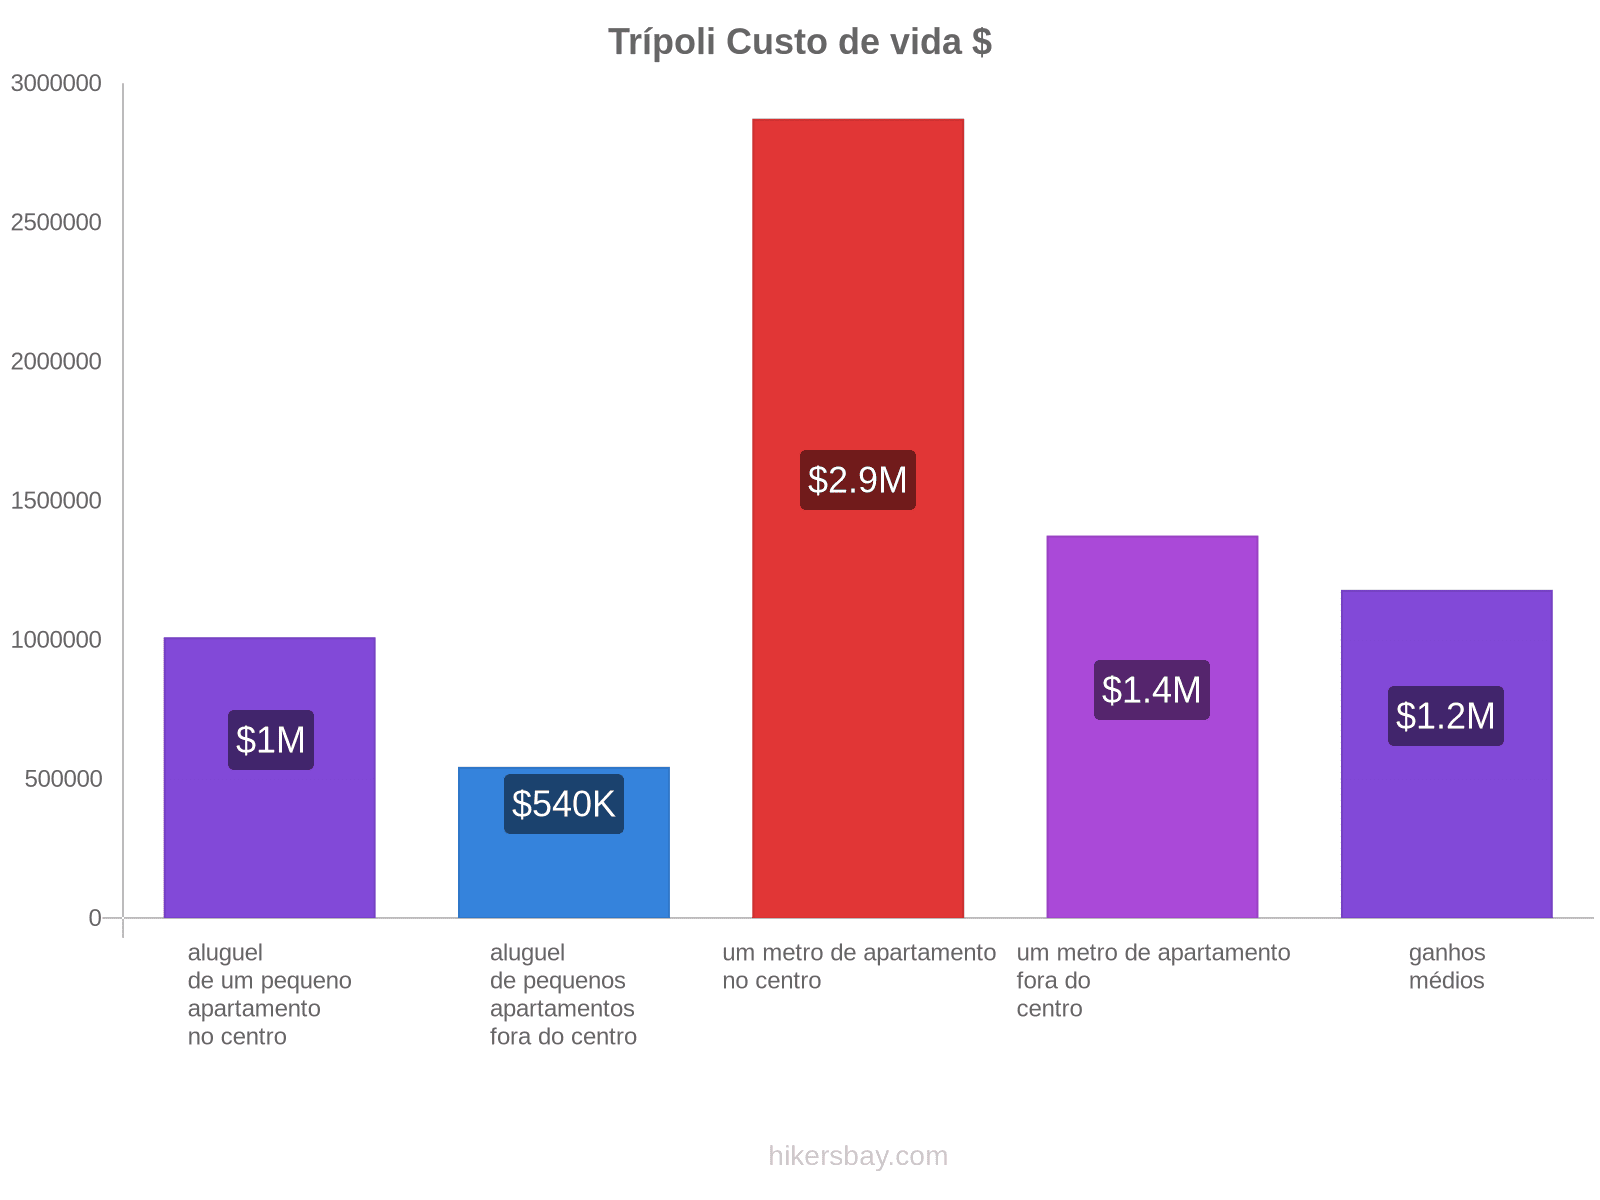 Trípoli custo de vida hikersbay.com